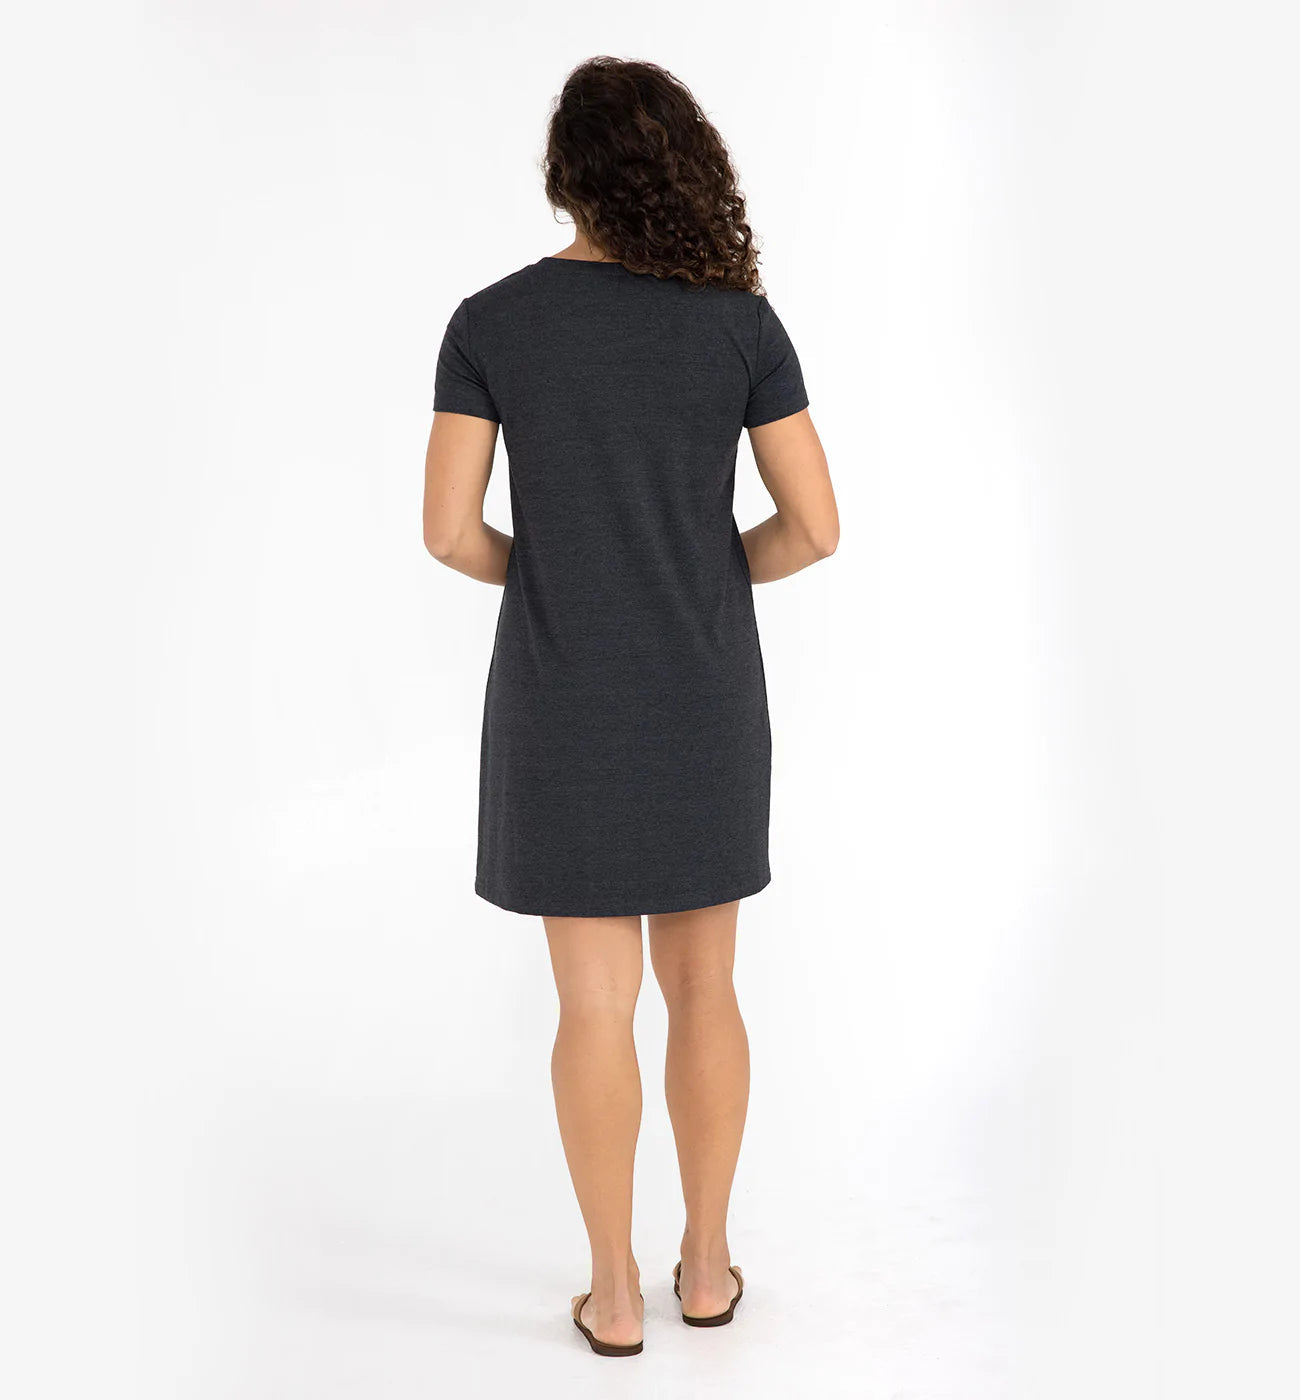 Bamboo Flex Pocket Dress - Fitted